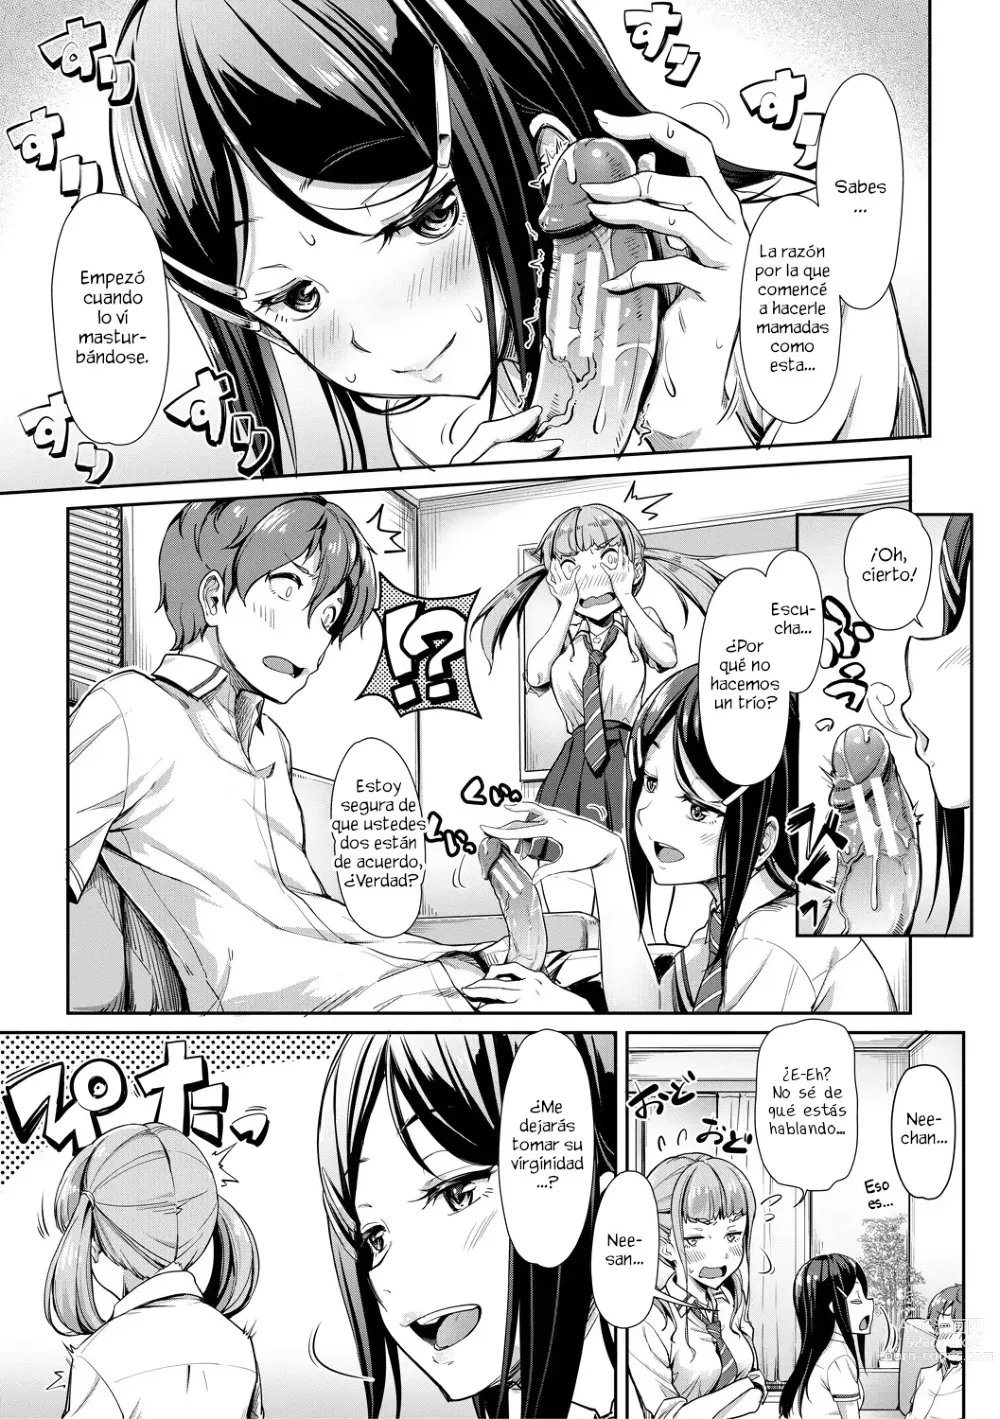 Page 8 of manga ¡Nee! ¡Nee! ¡Chantoshiyo!